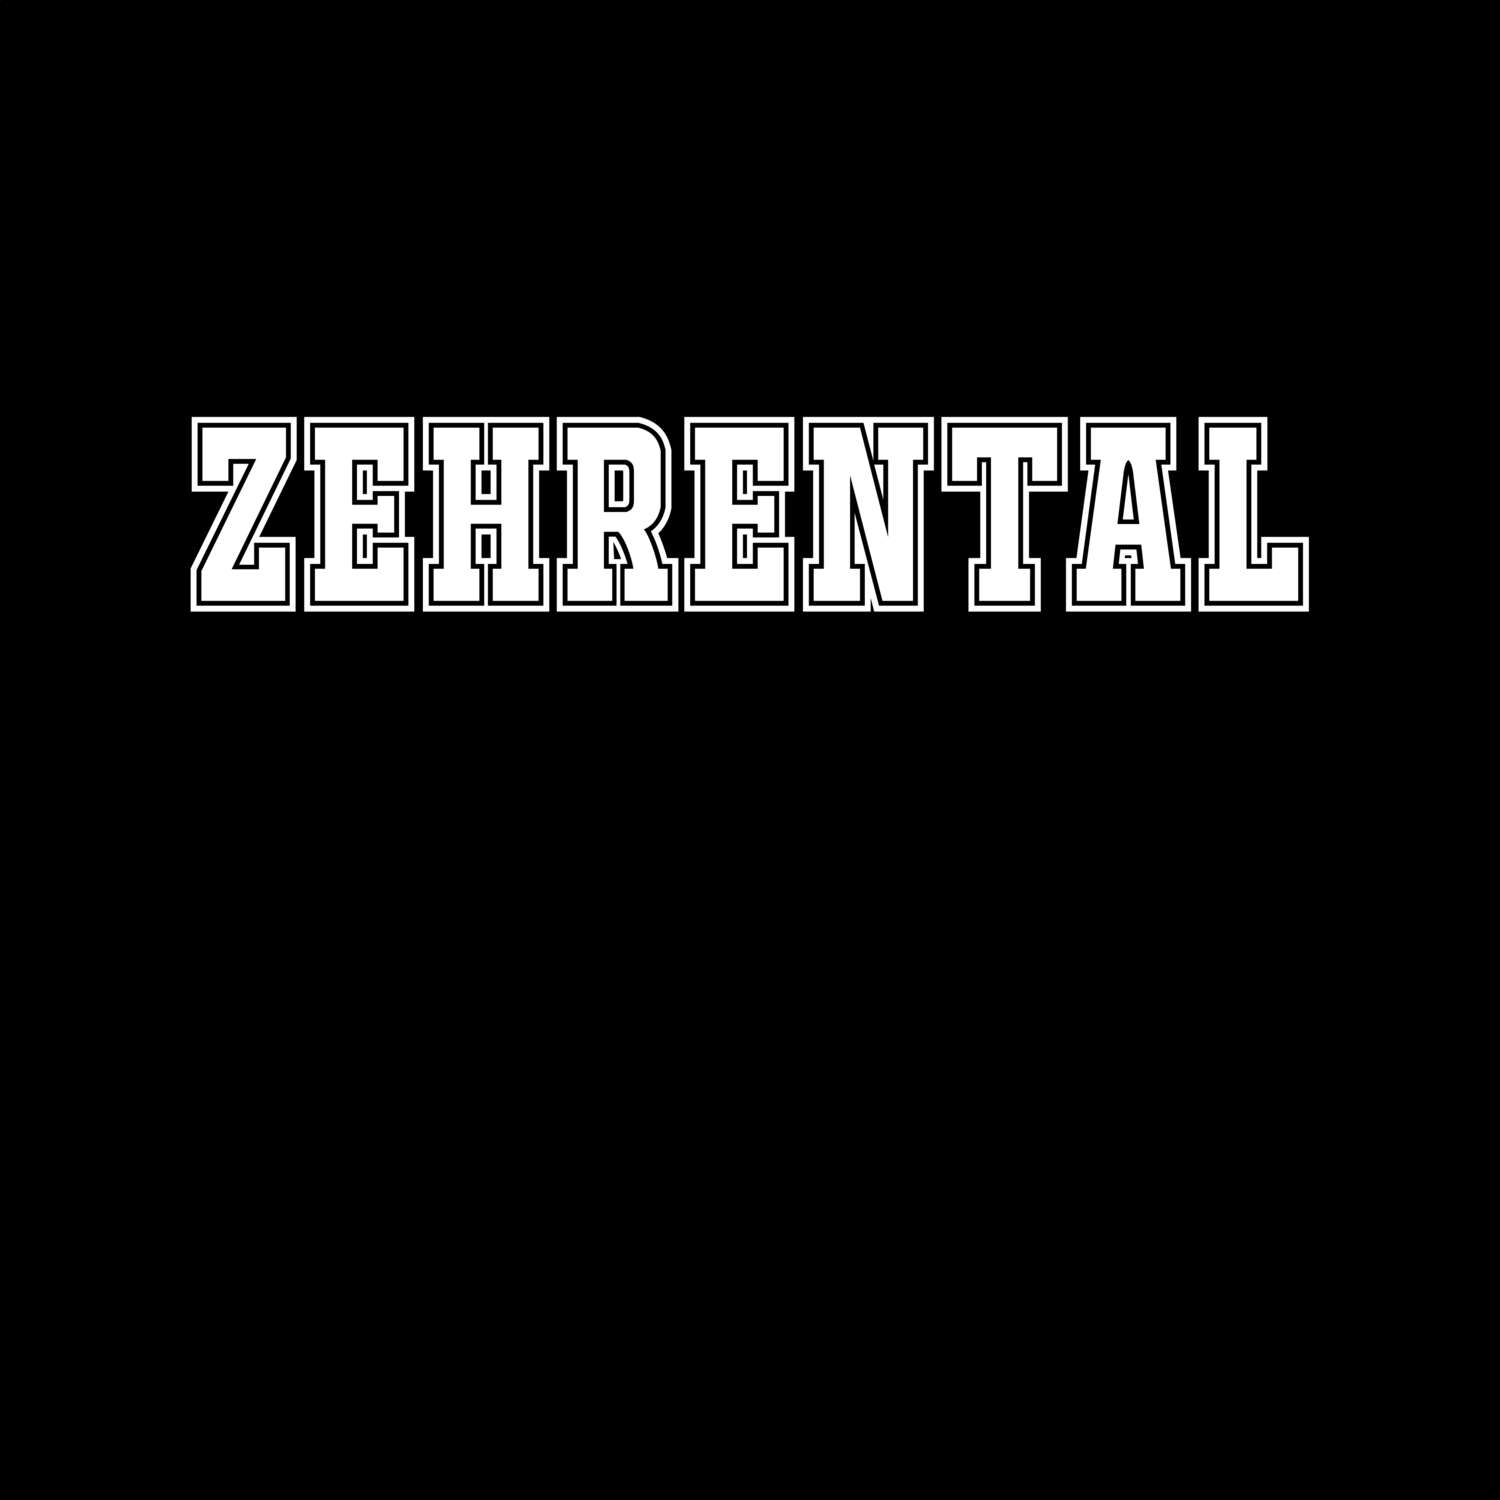 Zehrental T-Shirt »Classic«